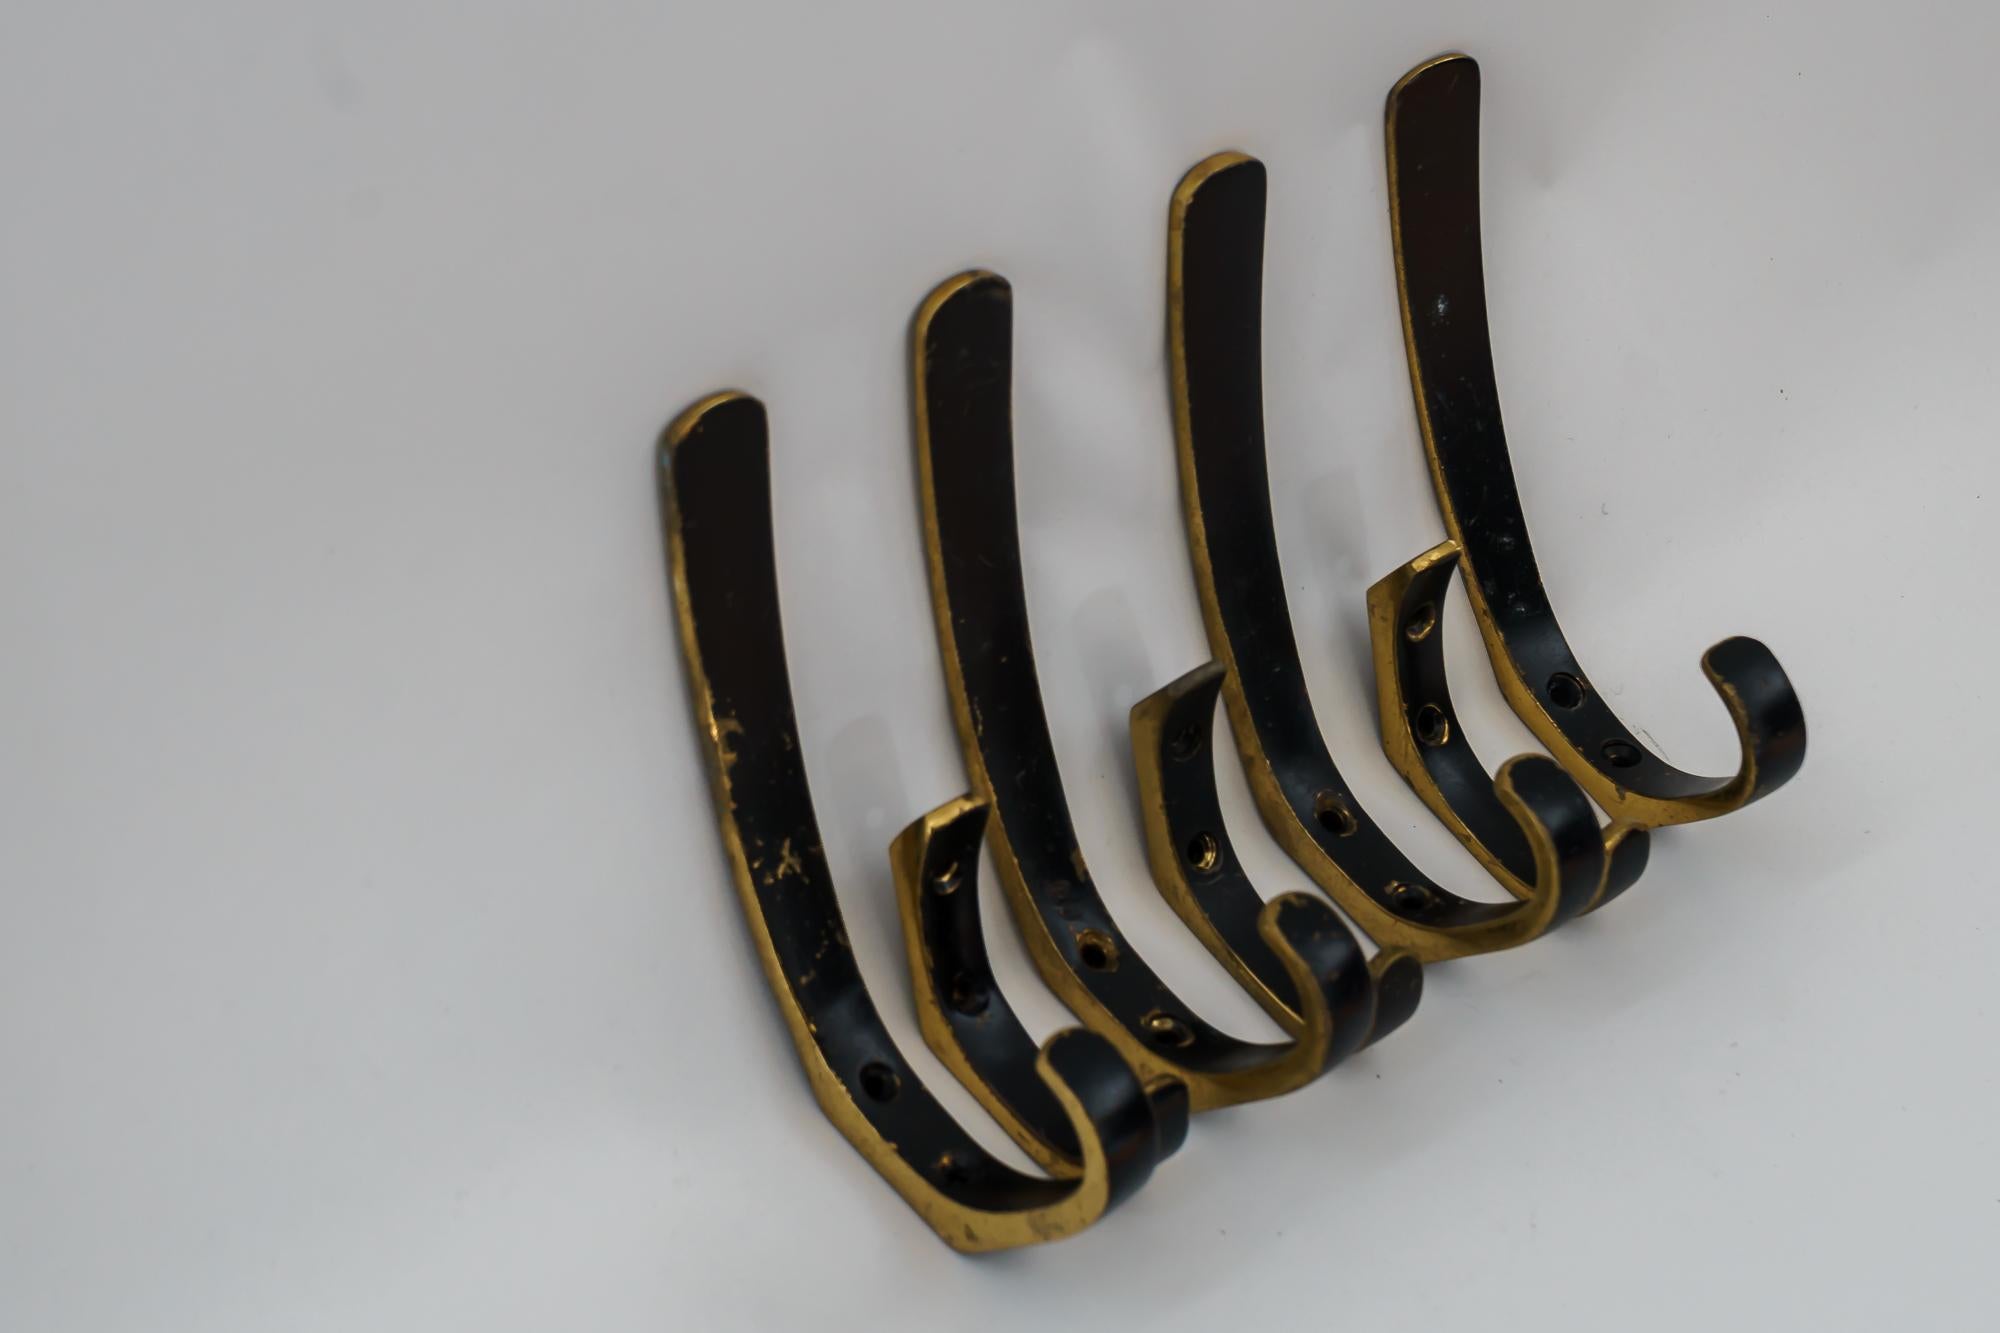 Hooks by Hertha Baller, circa 1950s
Original condition
Big hooks: 
H 15cm 
W 2cm
D 10cm

Small hooks:
H 7.5cm
W 1.5cm
D 6cm.